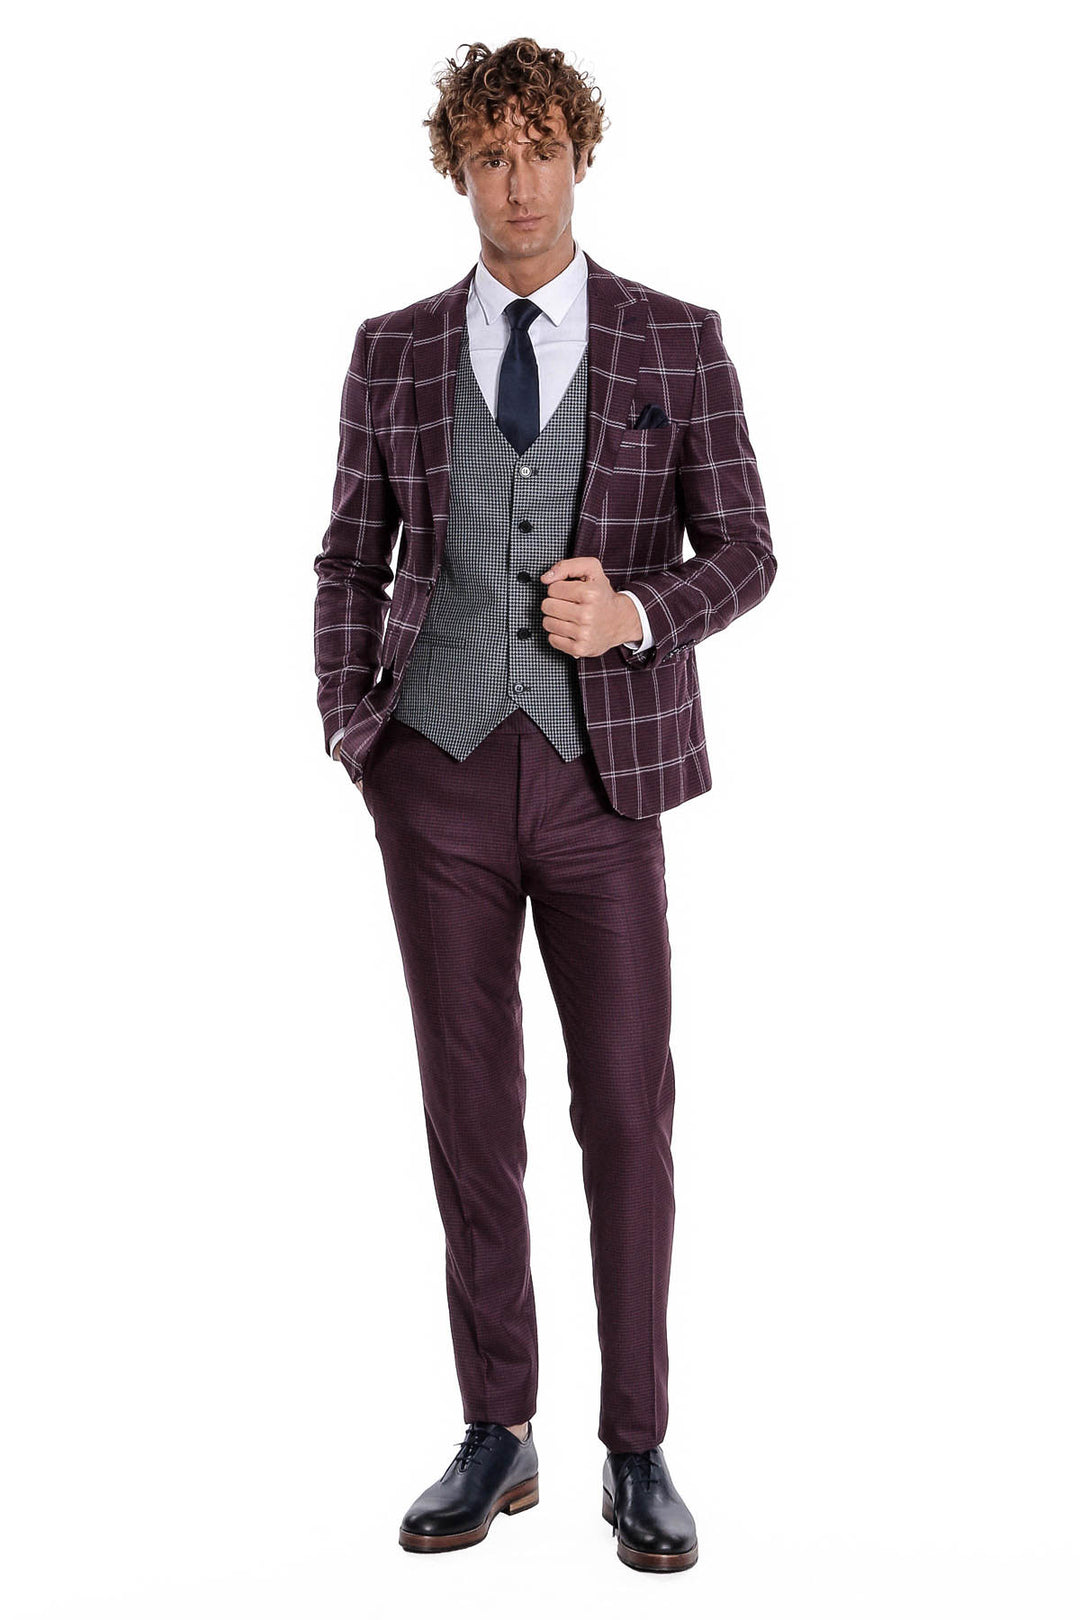 Checked Patterned Slim Fit Burgundy Men Suit - Wessi